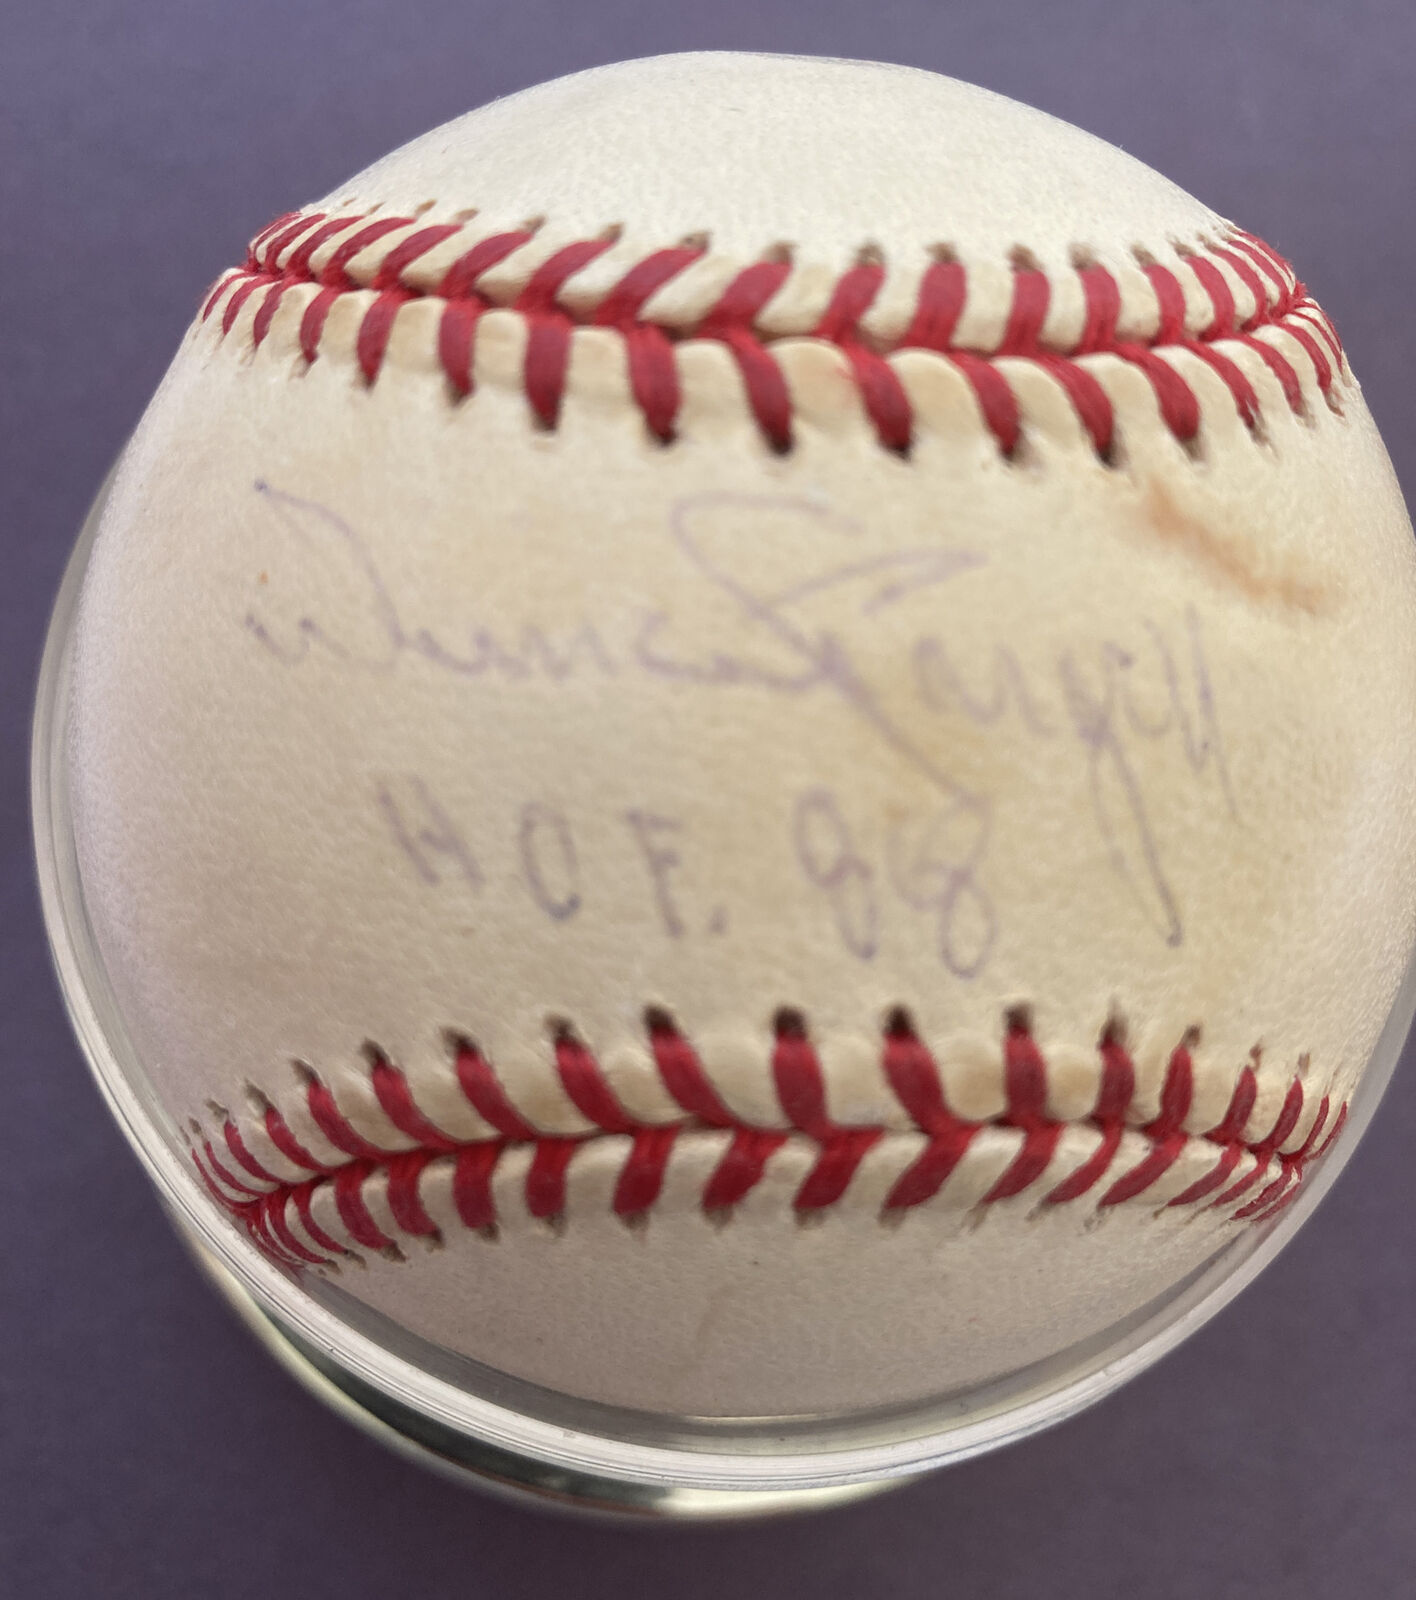 Willie stargell Signed MLB Official NL Baseball Auto HOF Pirates 